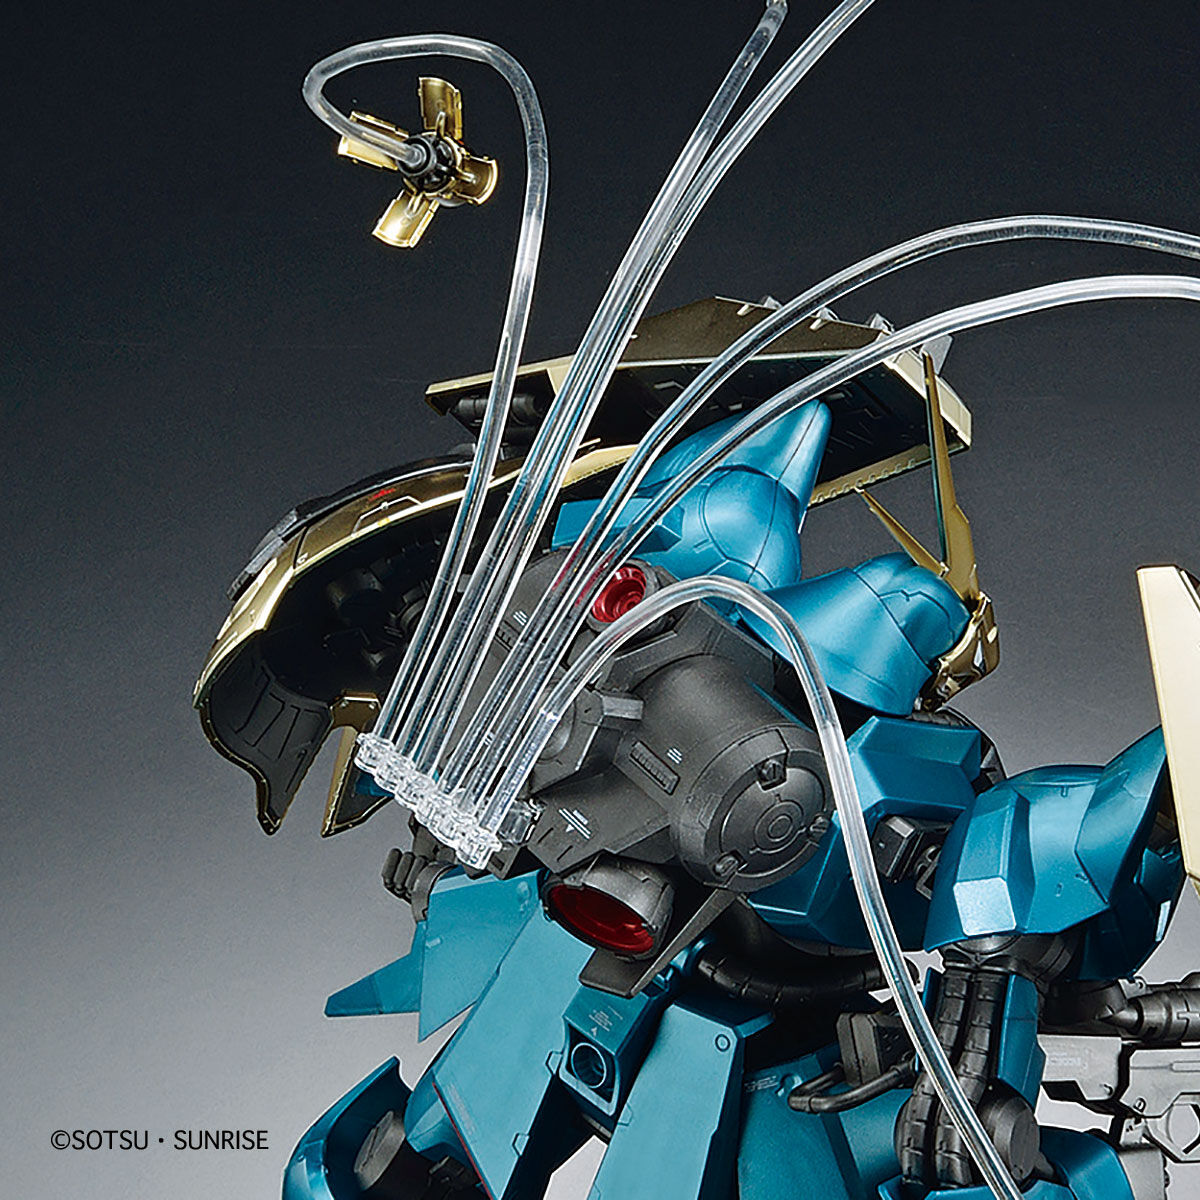 GYUNEI GUSS'S JAGO DOGA Special Coating 1/100 Scale Model Kit Figure GUNPLA Char's Counterattack GUNDAM SIDE-F BANDAI